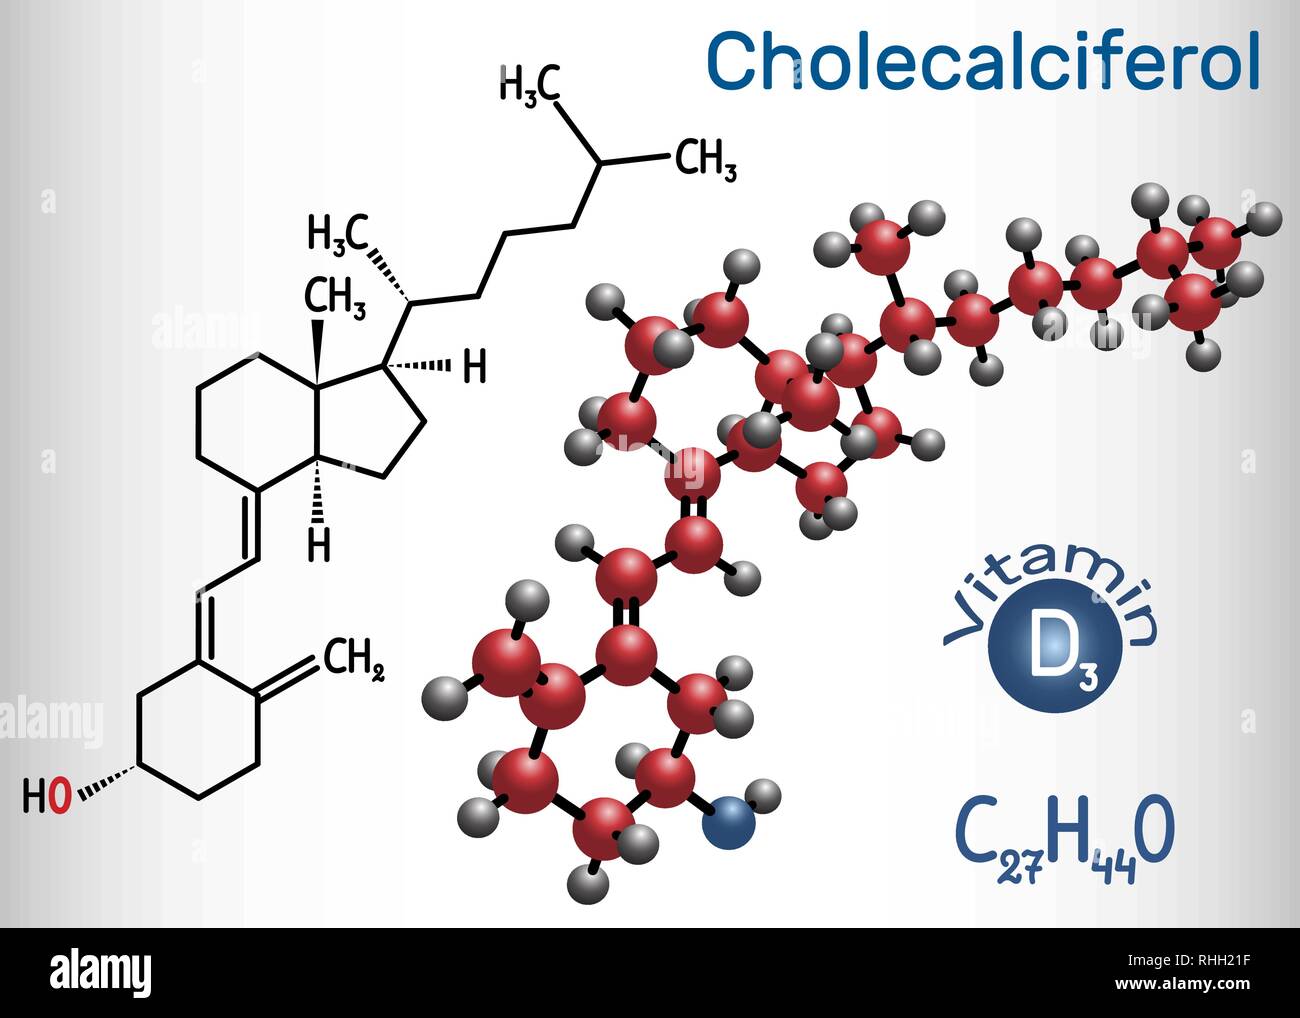 Cholecalciferol ( colecalciferol, vitamin D3) molecule. Structural chemical formula and molecule model. Vector illustration Stock Vector